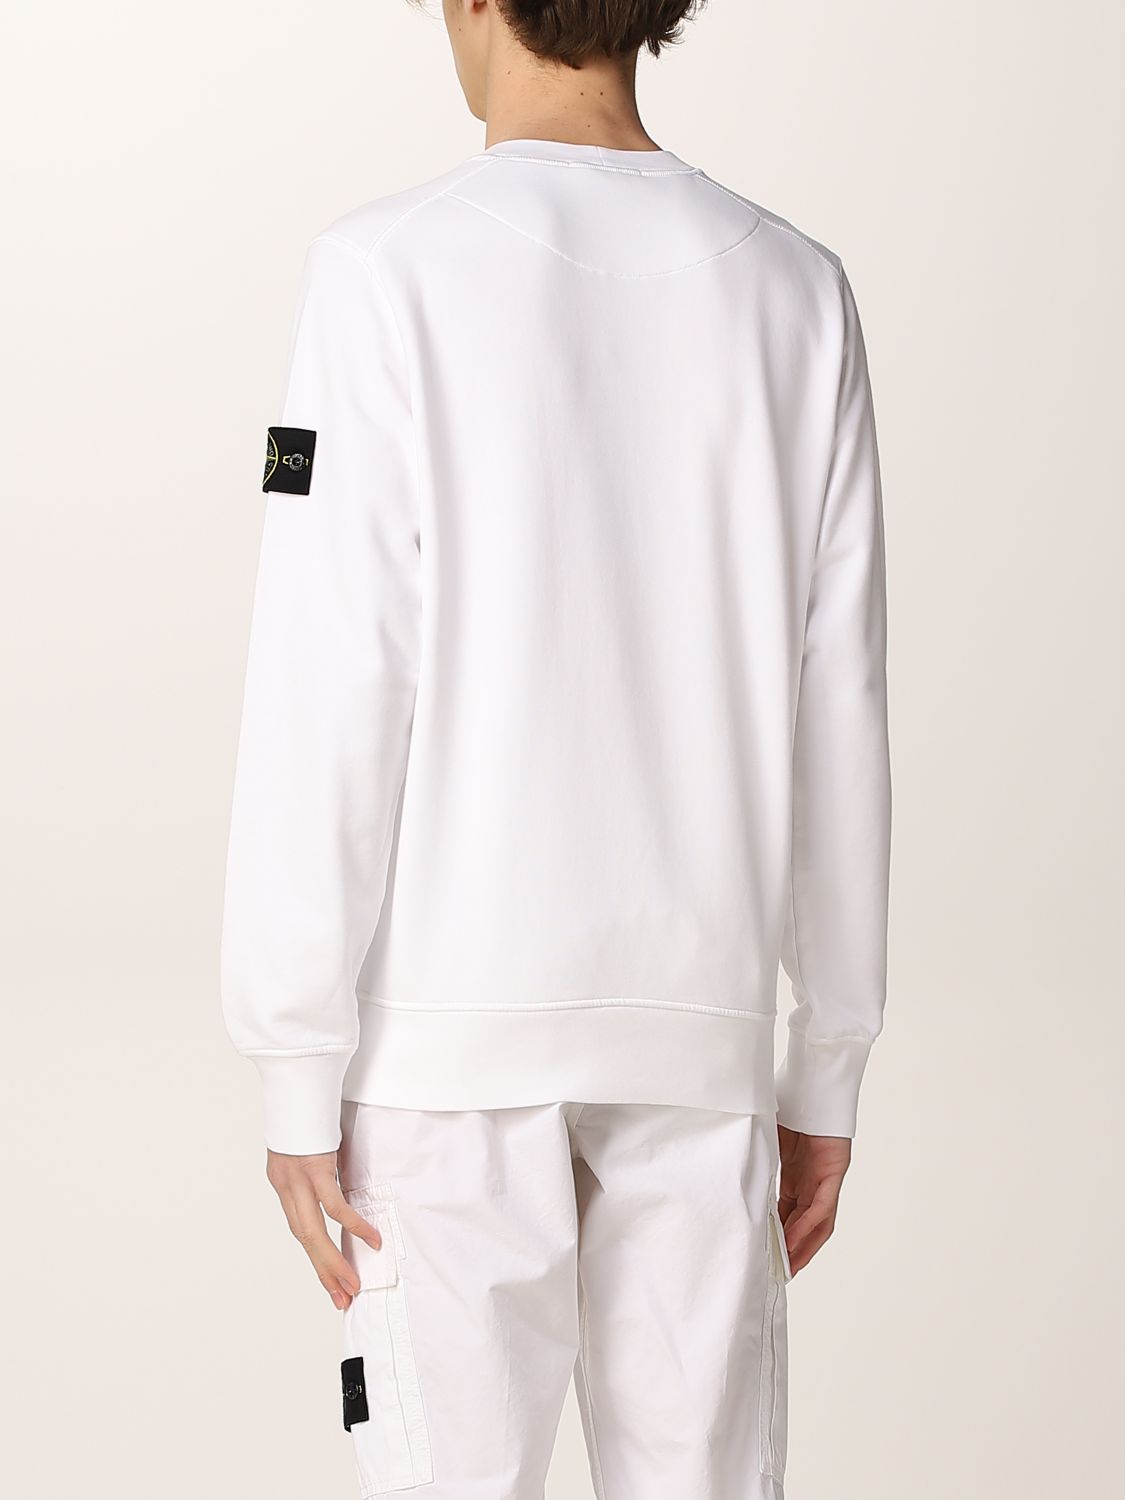 STONE ISLAND: sweatshirt in garment-dyed cotton - White | Stone Island ...